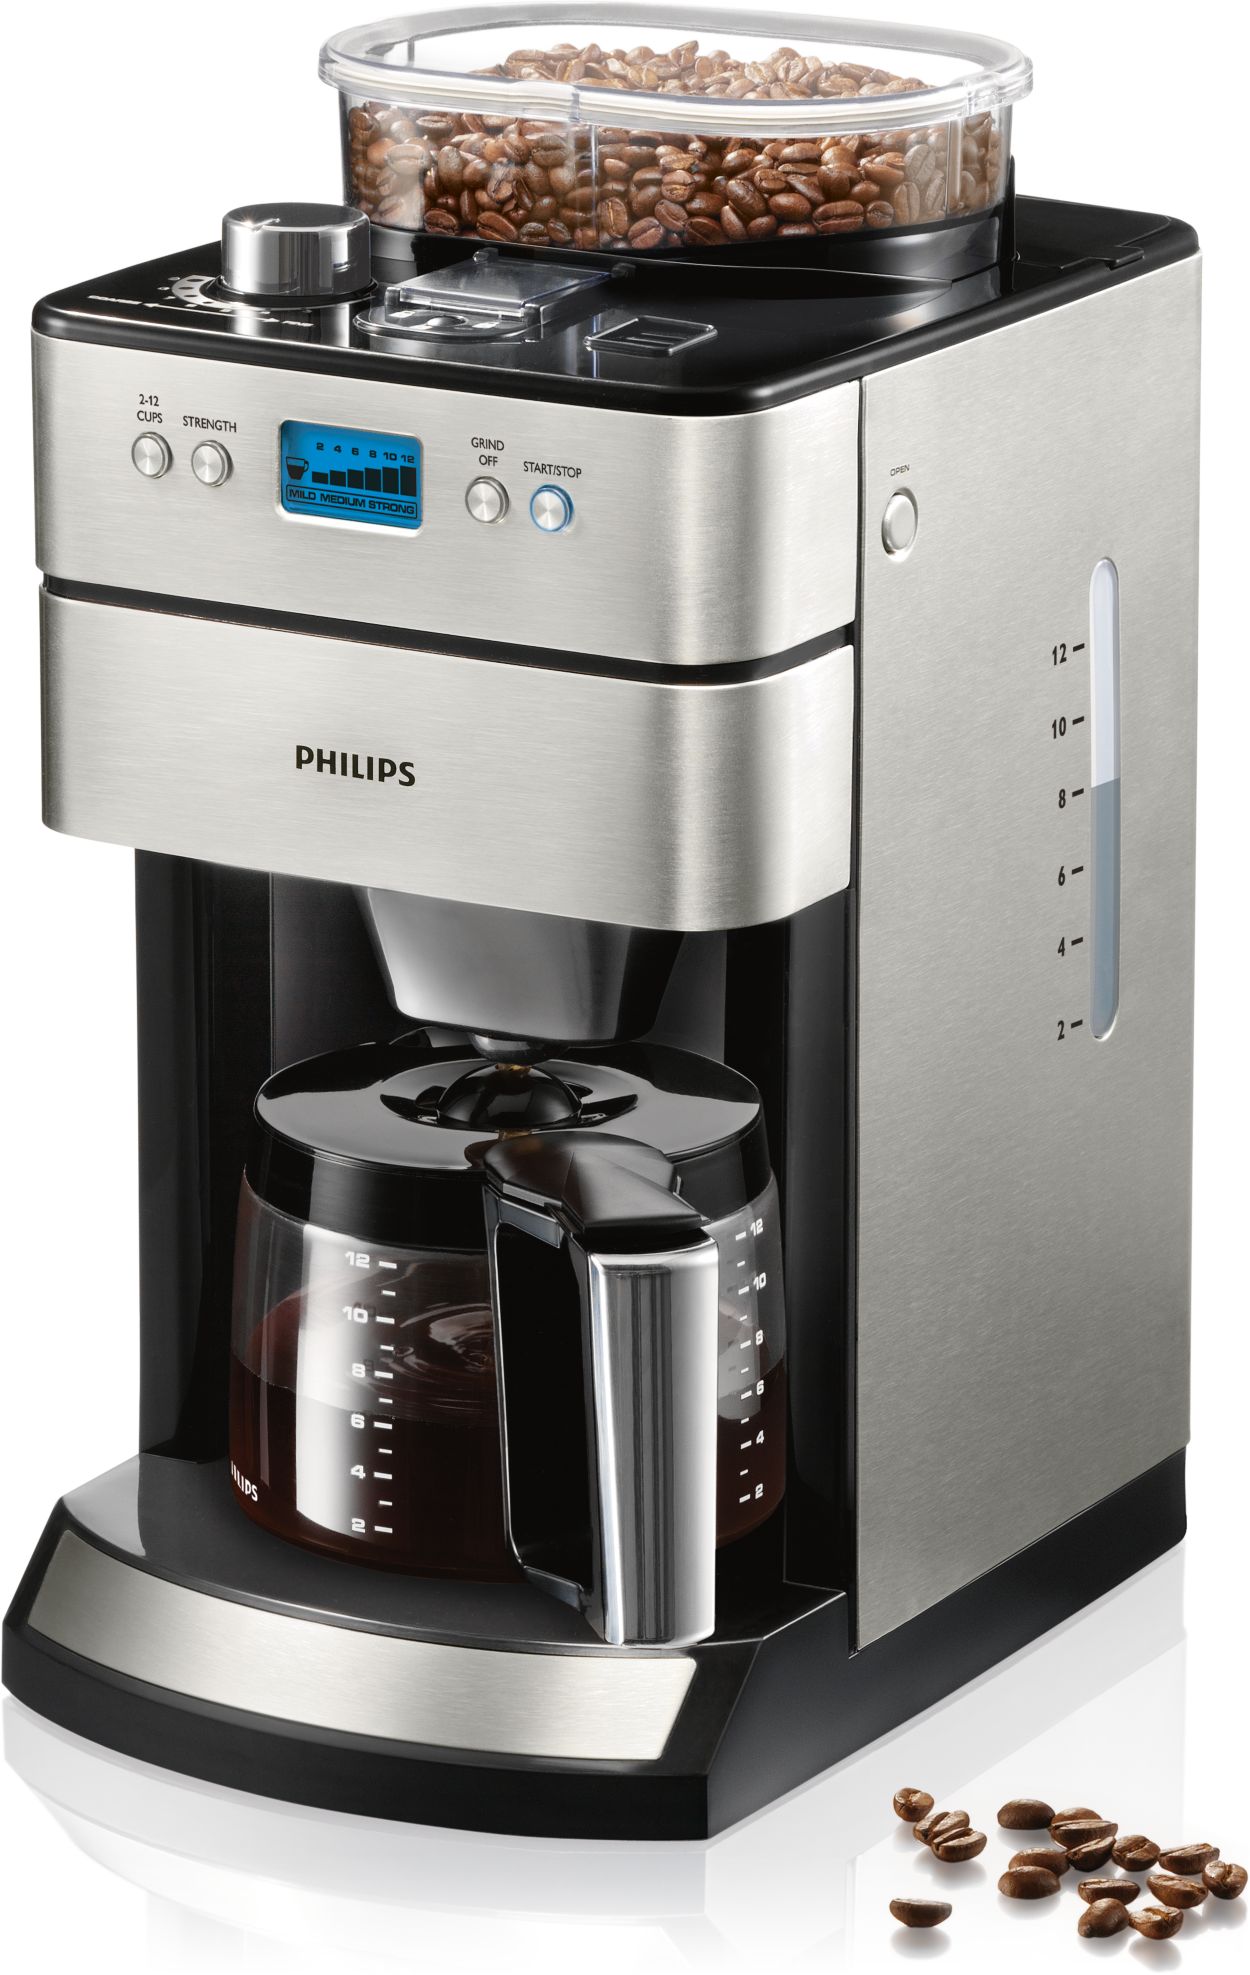 & Brew Koffiezetapparaat HD7740/00 Philips